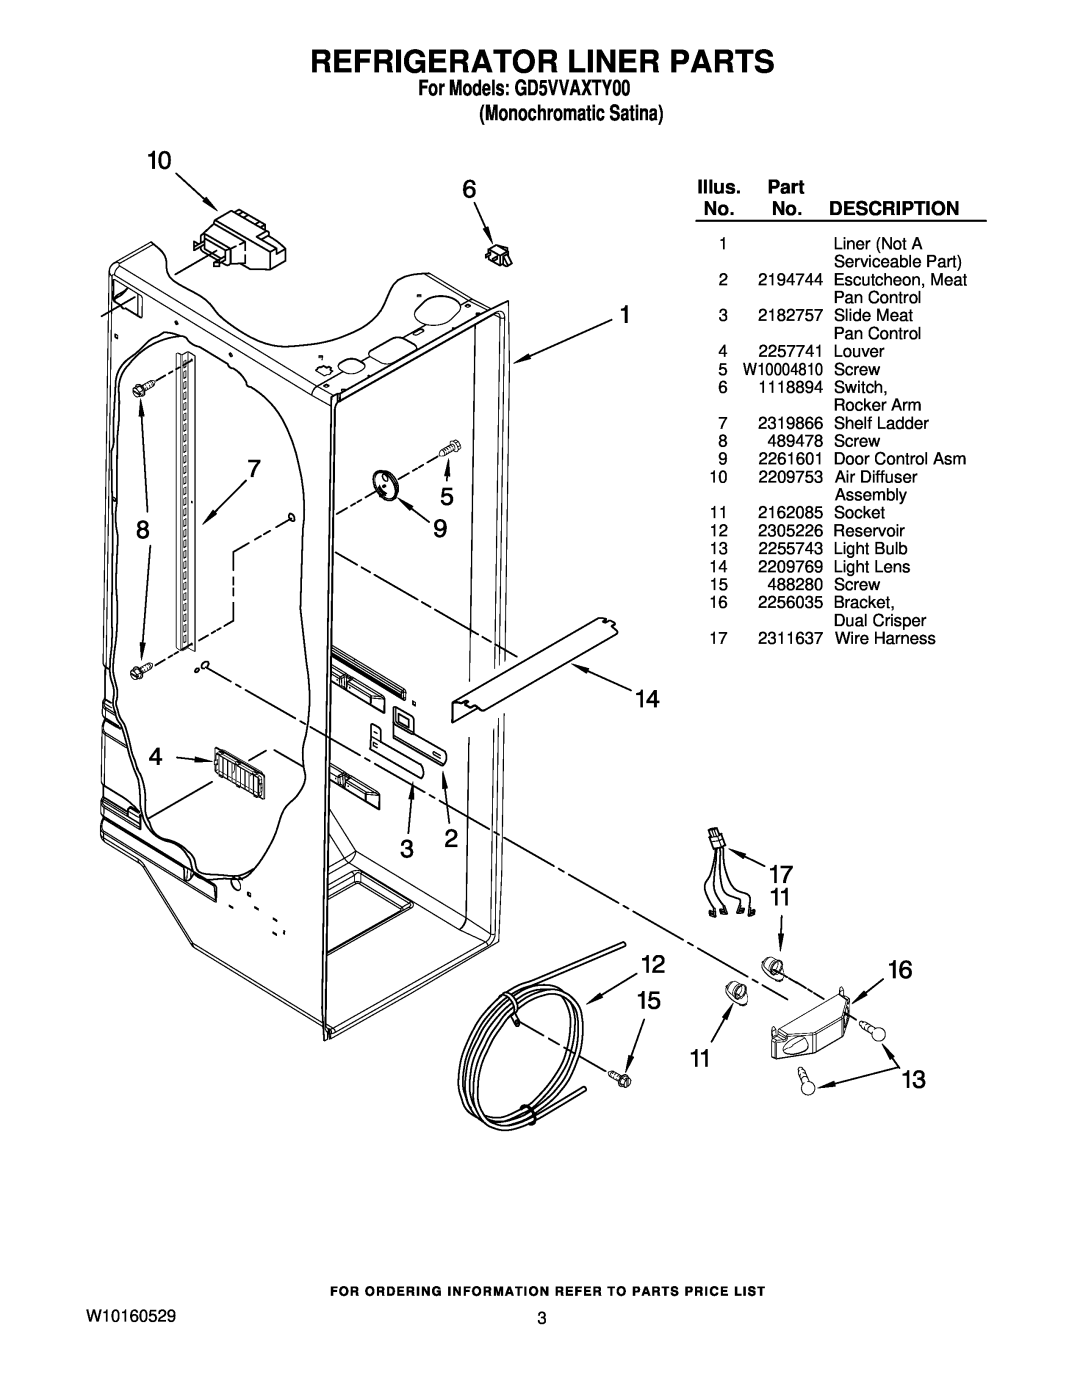 Whirlpool manual Refrigerator Liner Parts, For Models GD5VVAXTY00 Monochromatic Satina, Illus, Description 